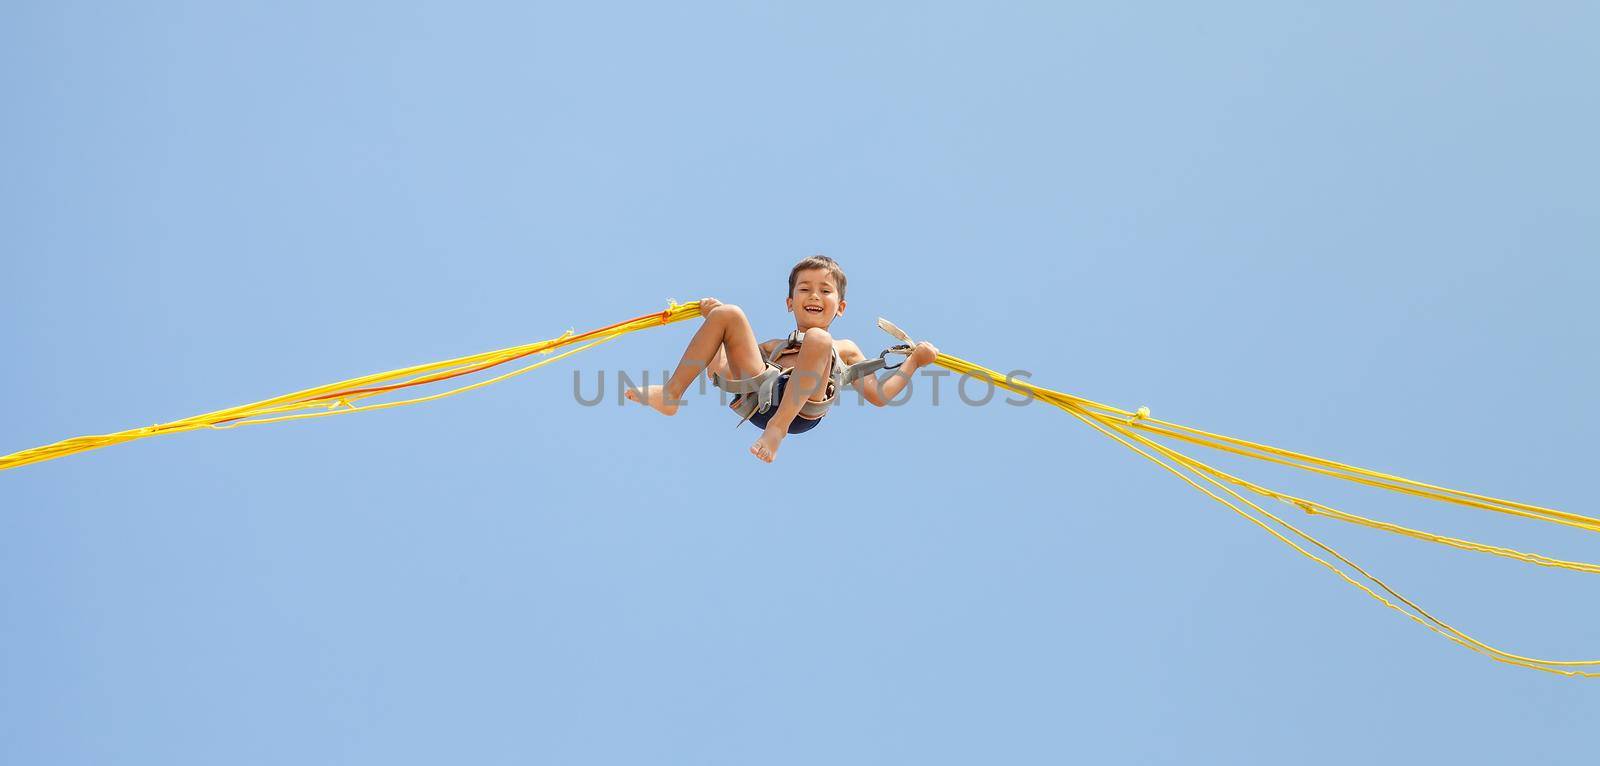 Little boy jumping on a trampoline on blue sky background 